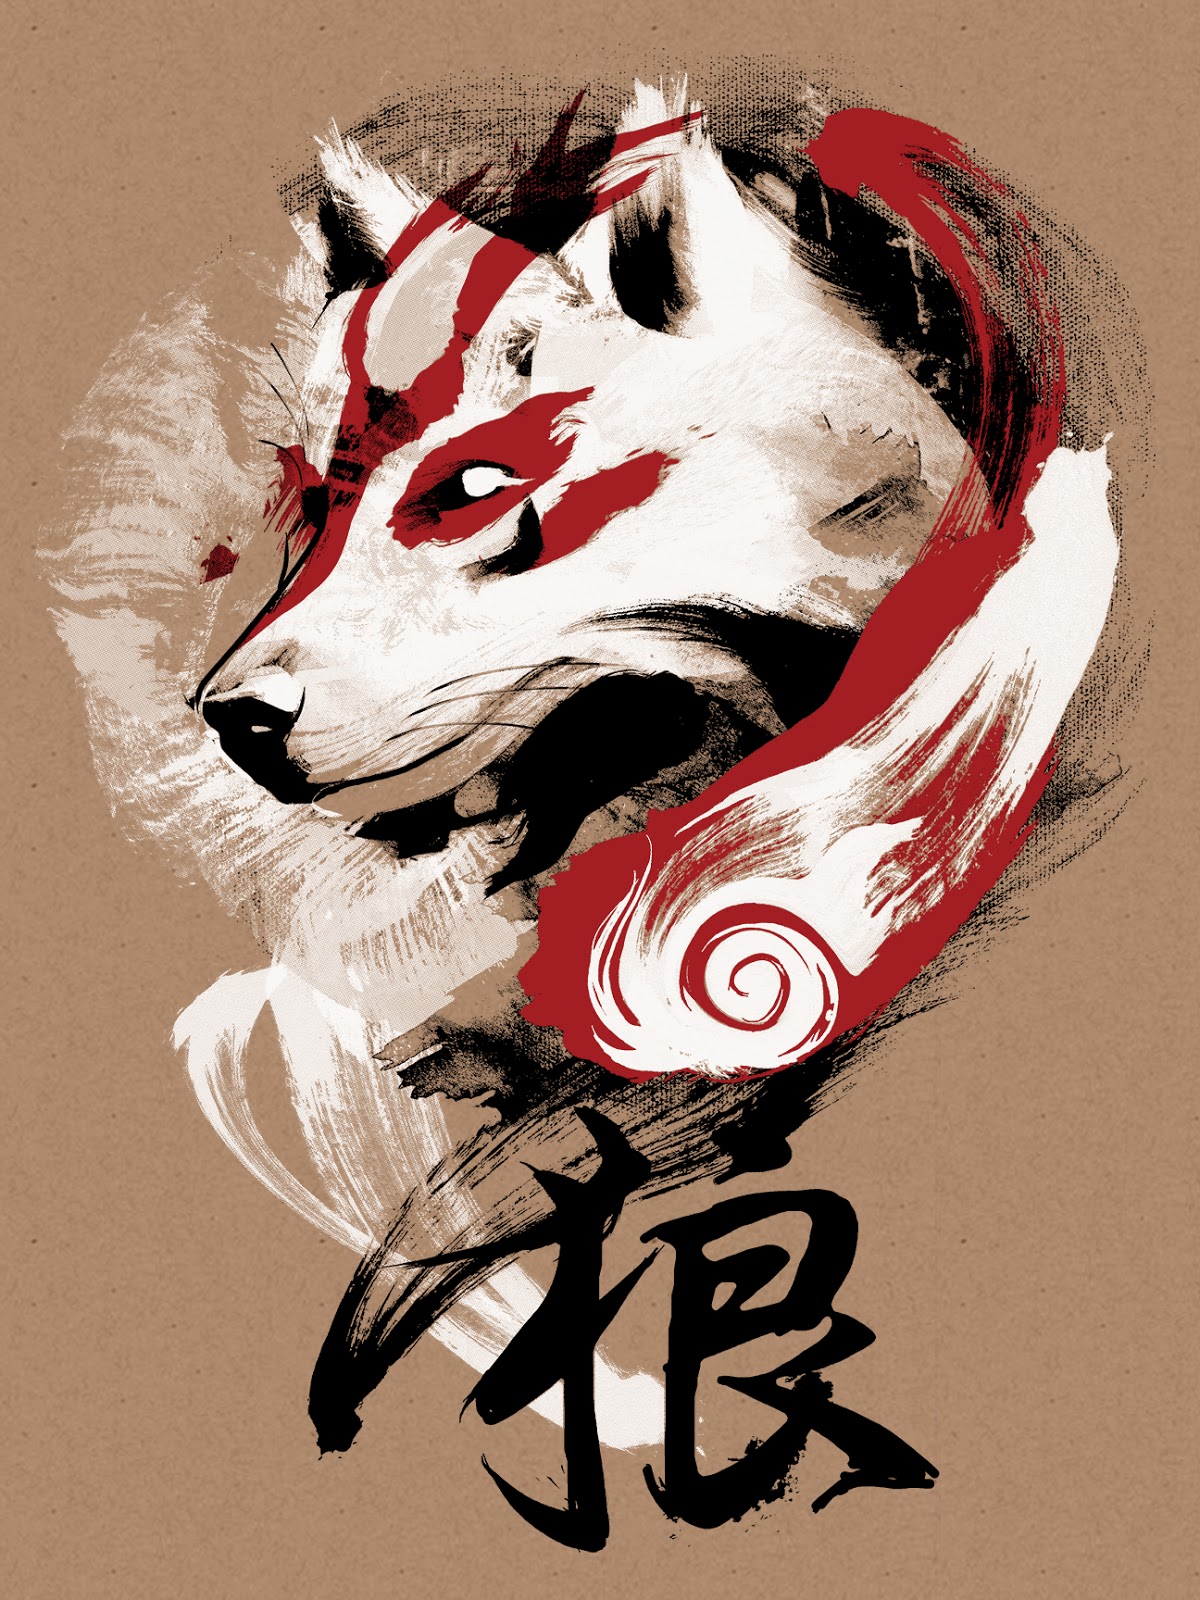 The Geeky Nerfherder: Cool Art: 'Wolf' by Jimiyo